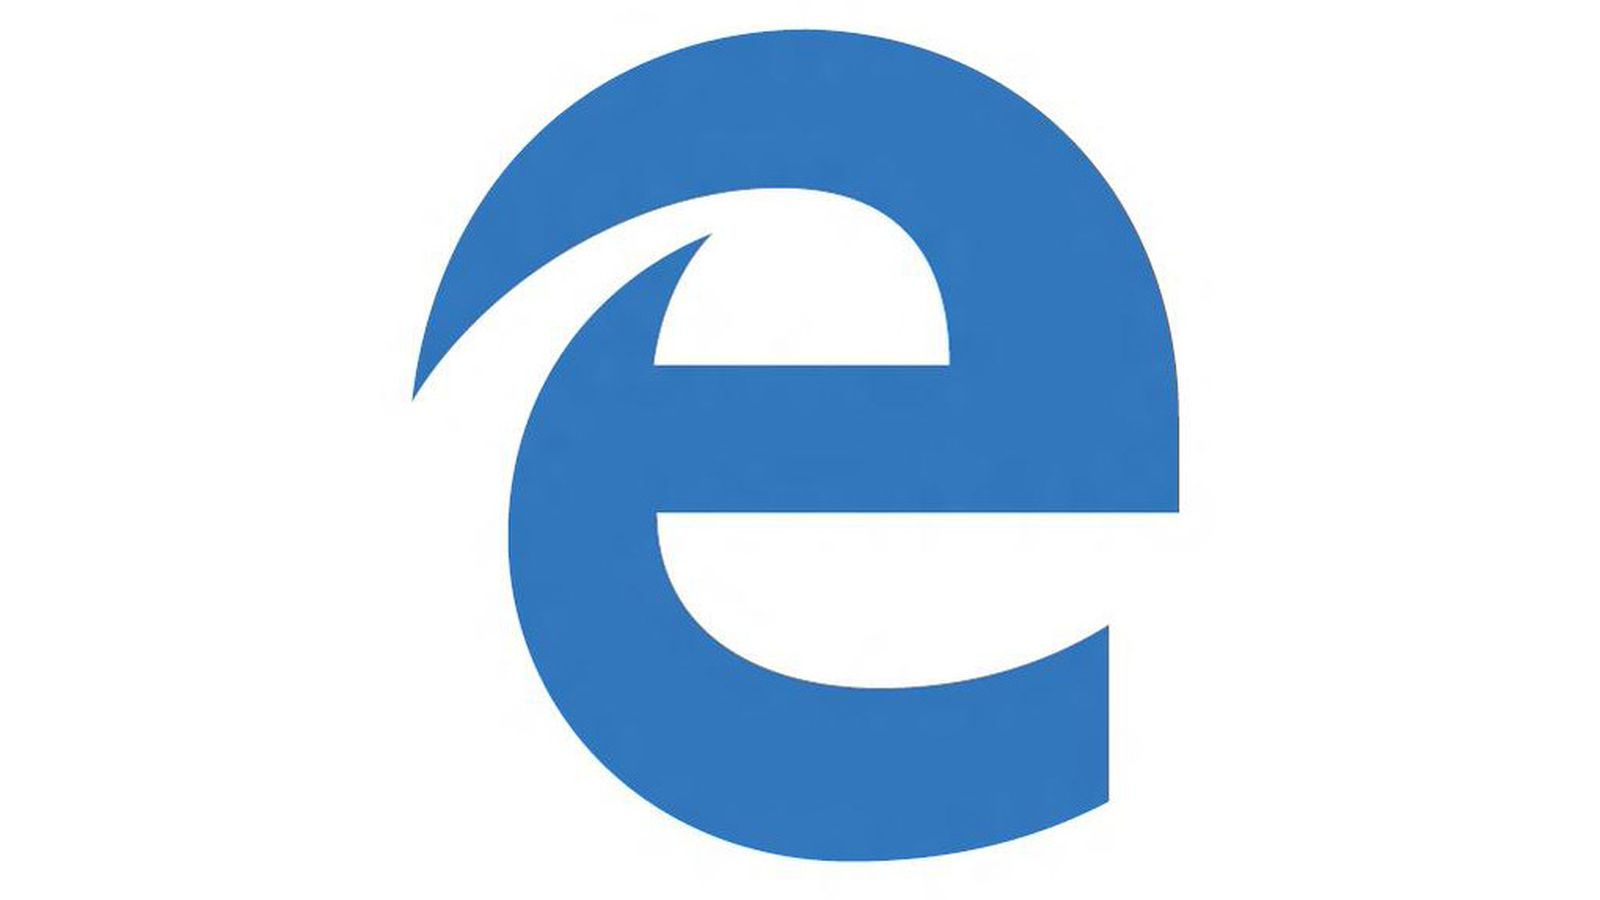 Edge Microsoft Browser Logo